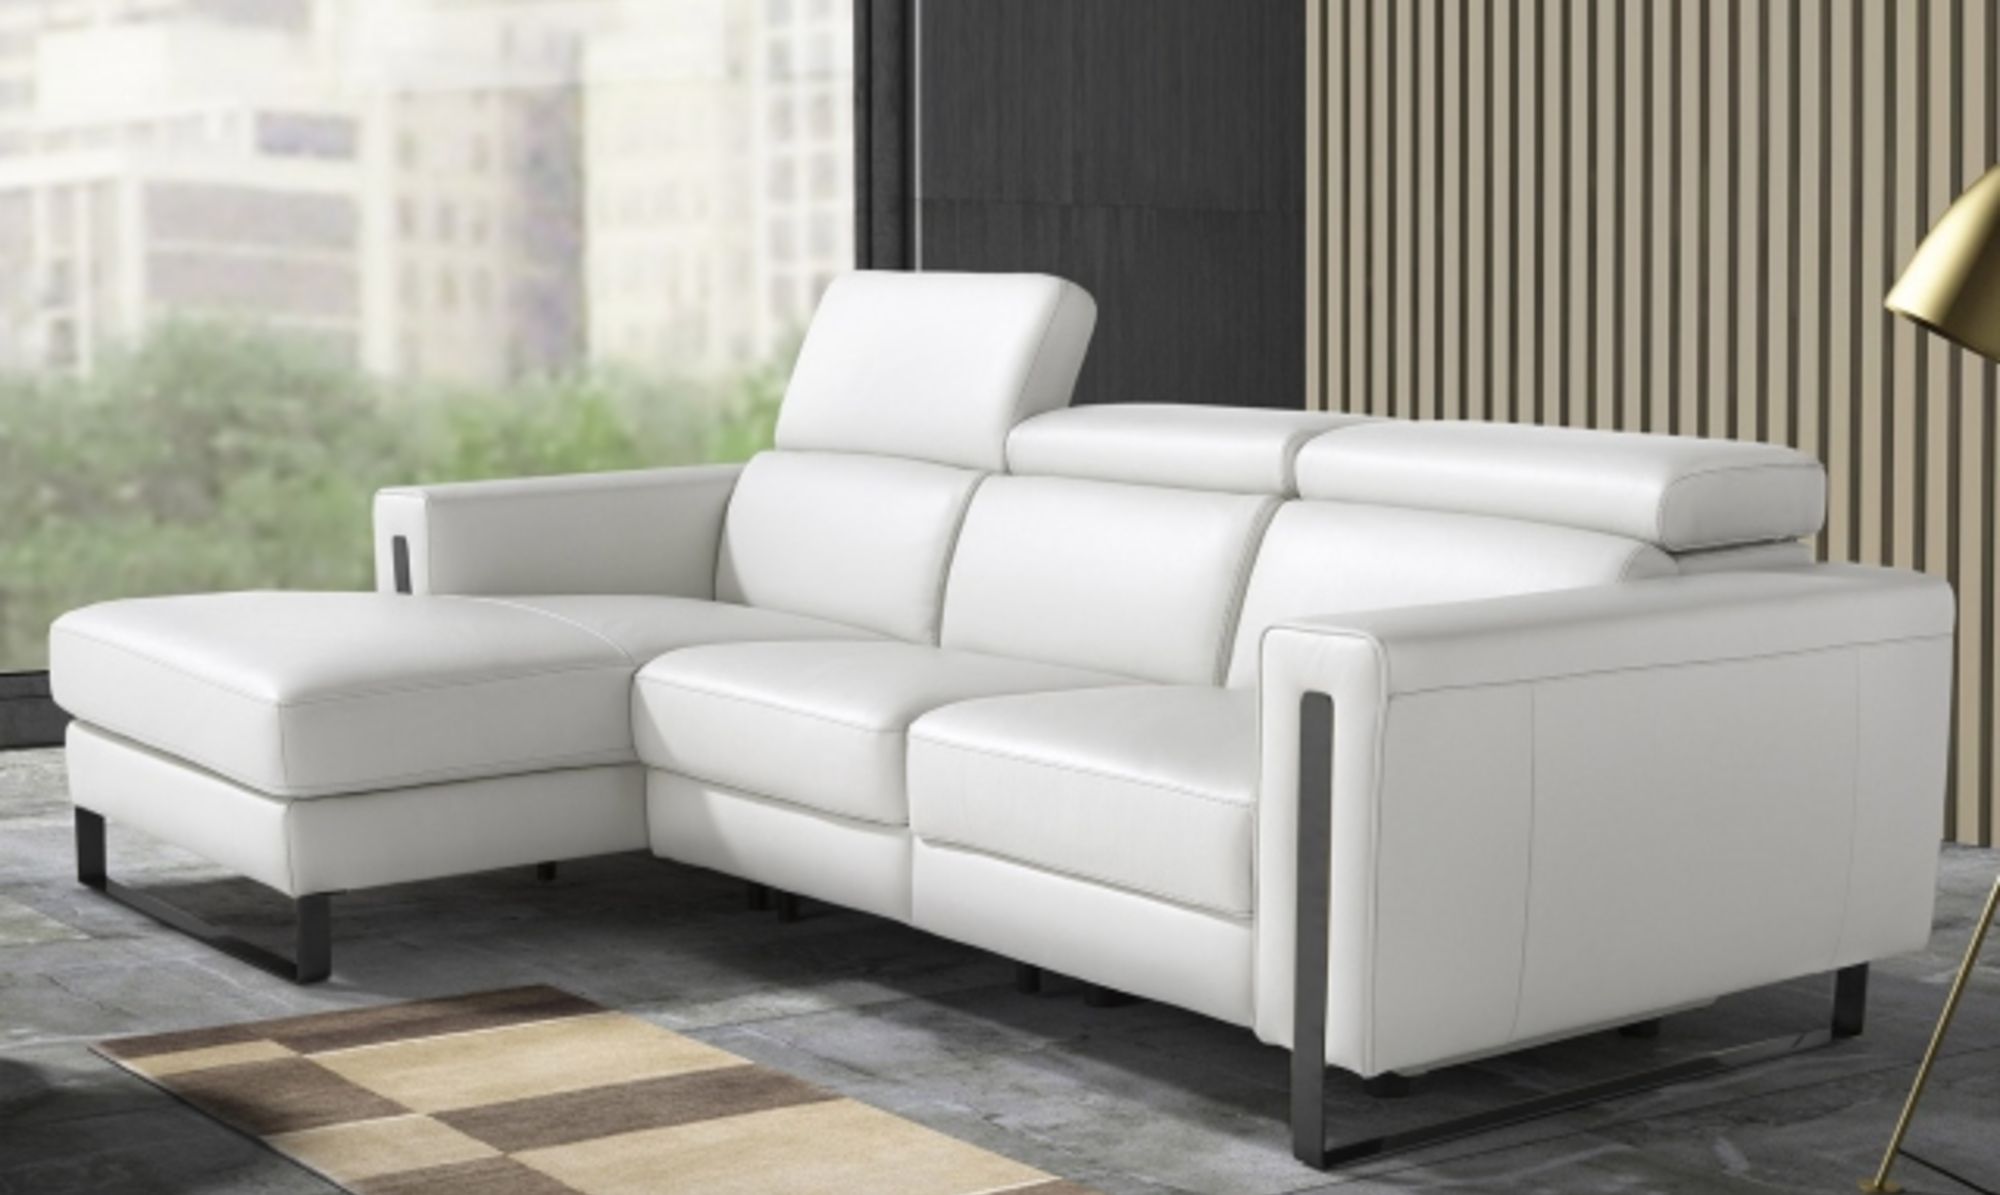 White Leather Sofa Fishpools Lifestyle, White Leather Bed Sofa